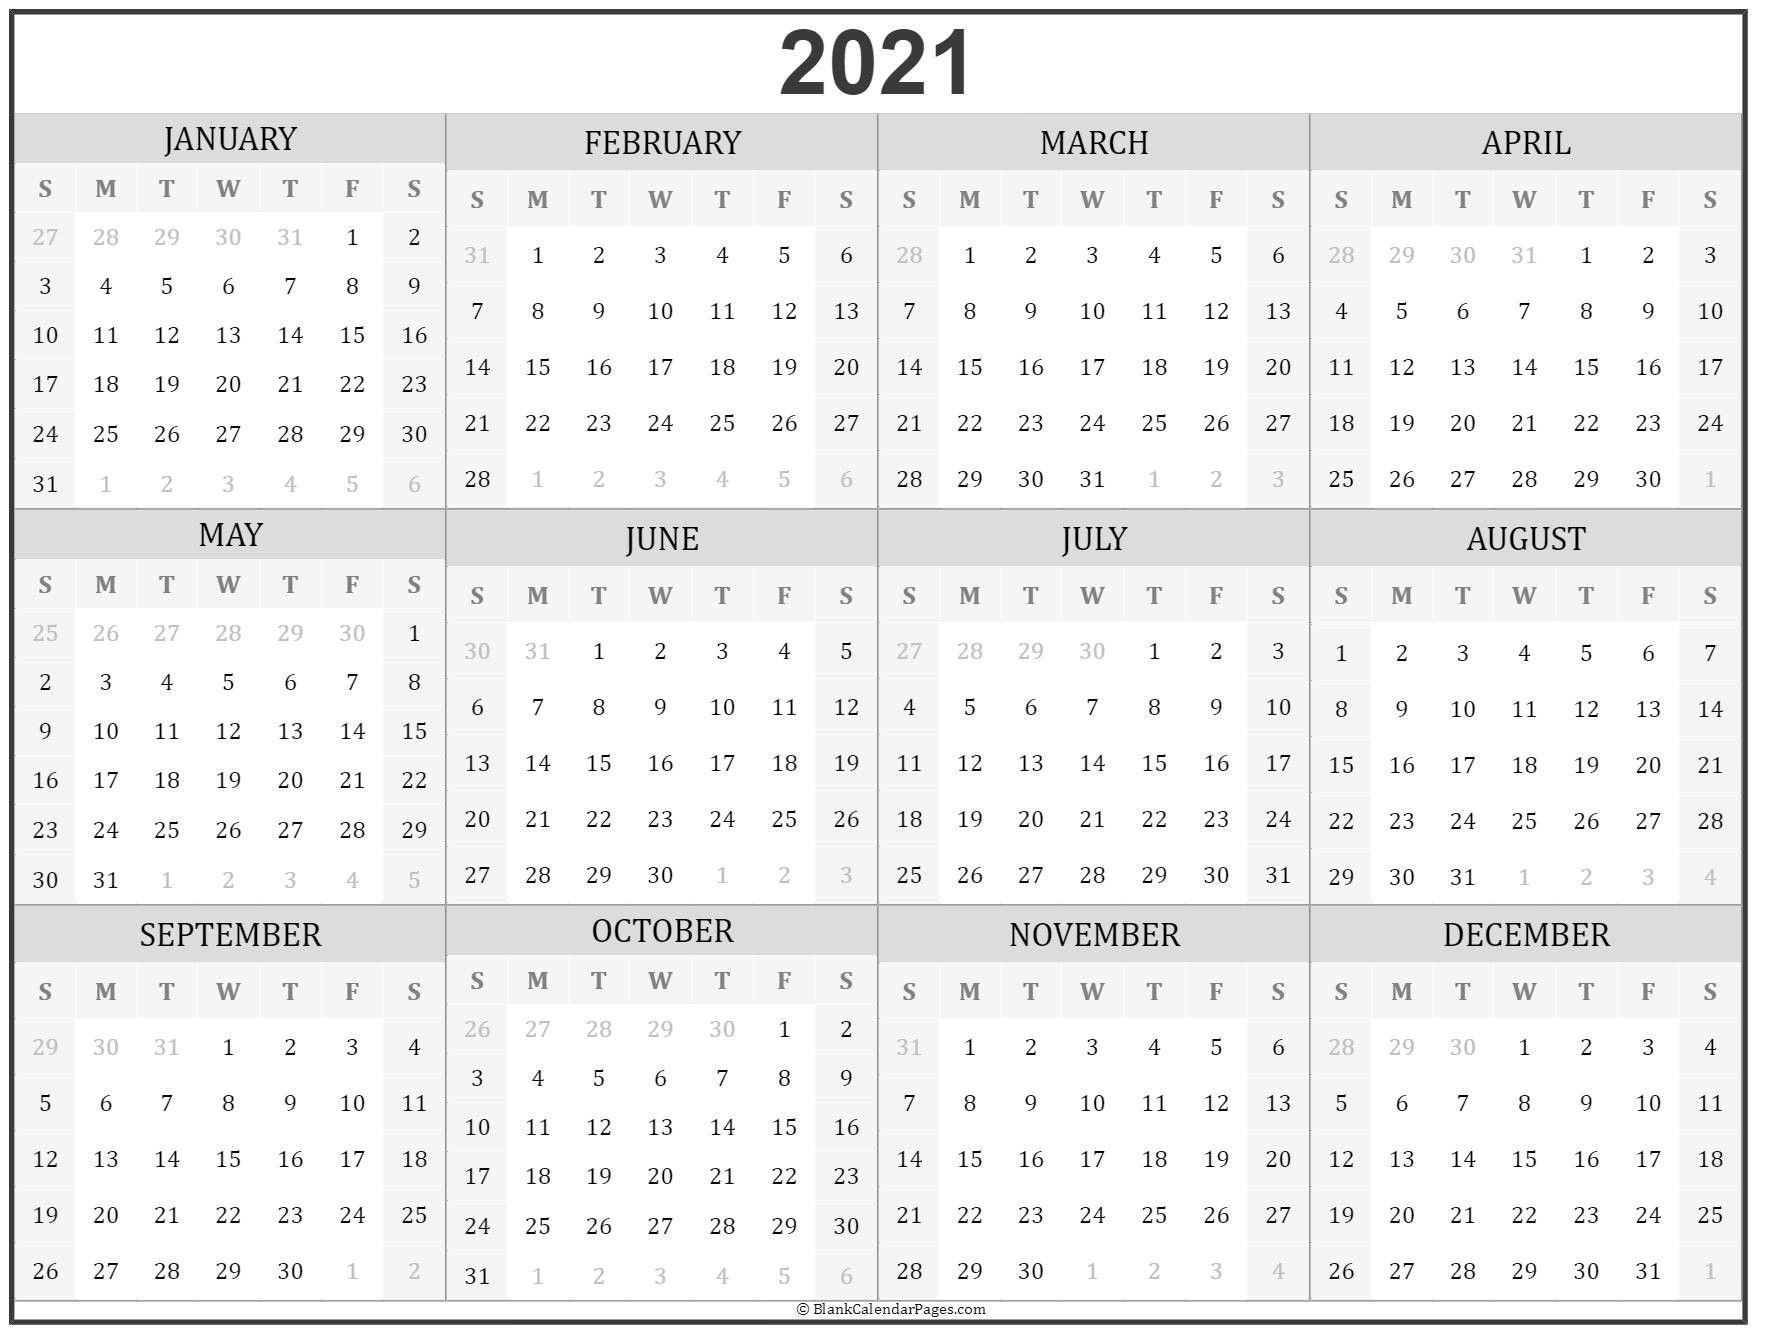 2021 Year Calendar 2021 Year Calendar 2021 Year Calendar-2021 Full Year Monthly Calendar Printable Free